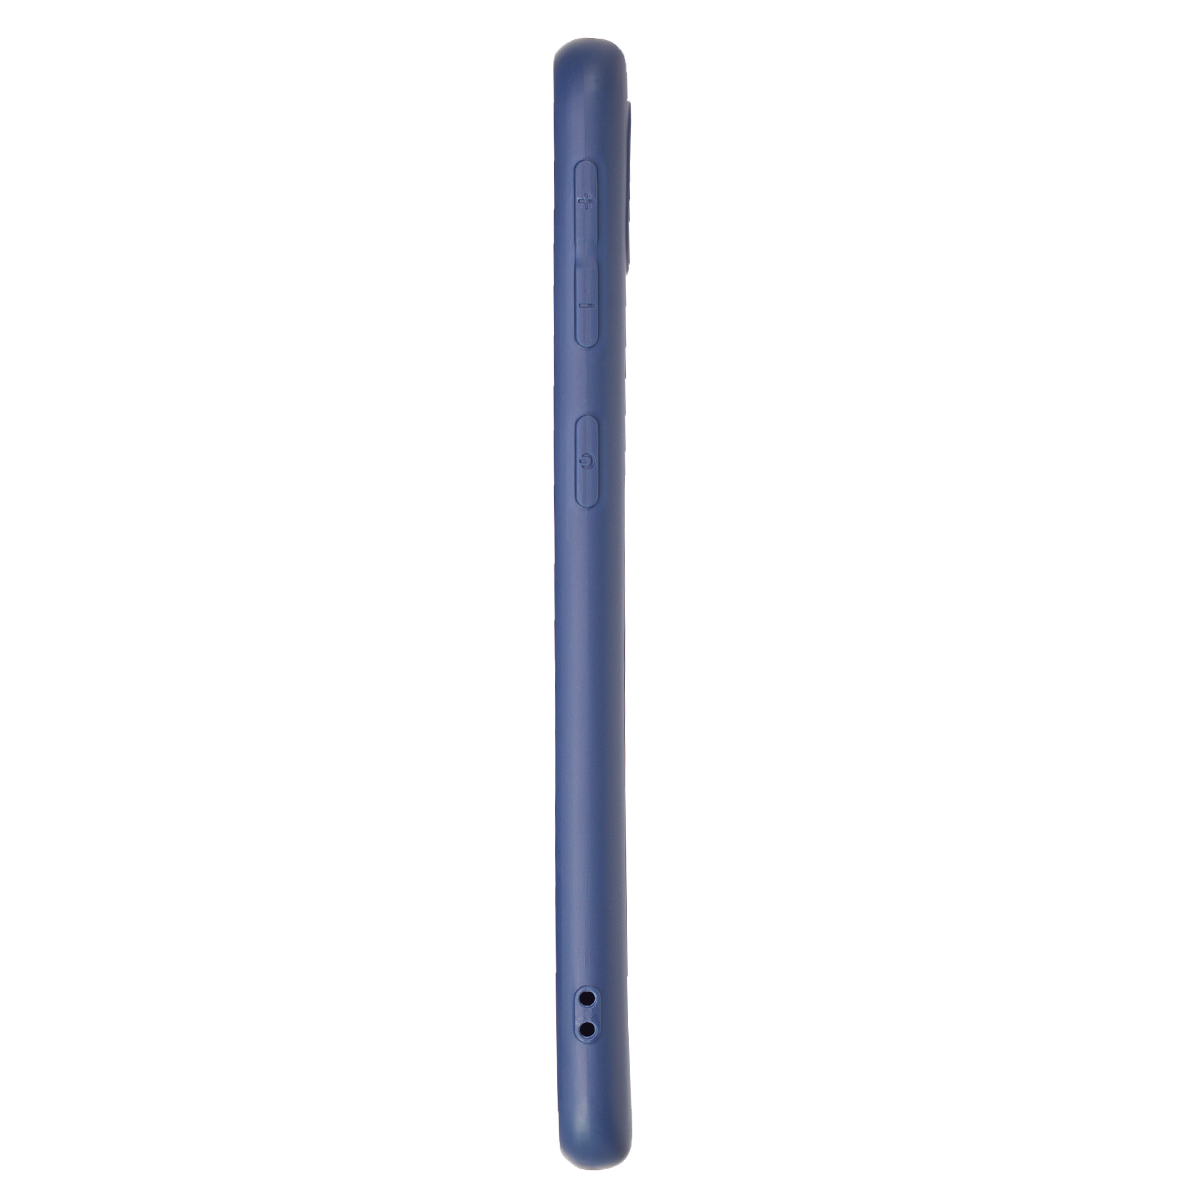 Husa Silicon Slim Samsung Galaxy A40, Albastru Mat thumb